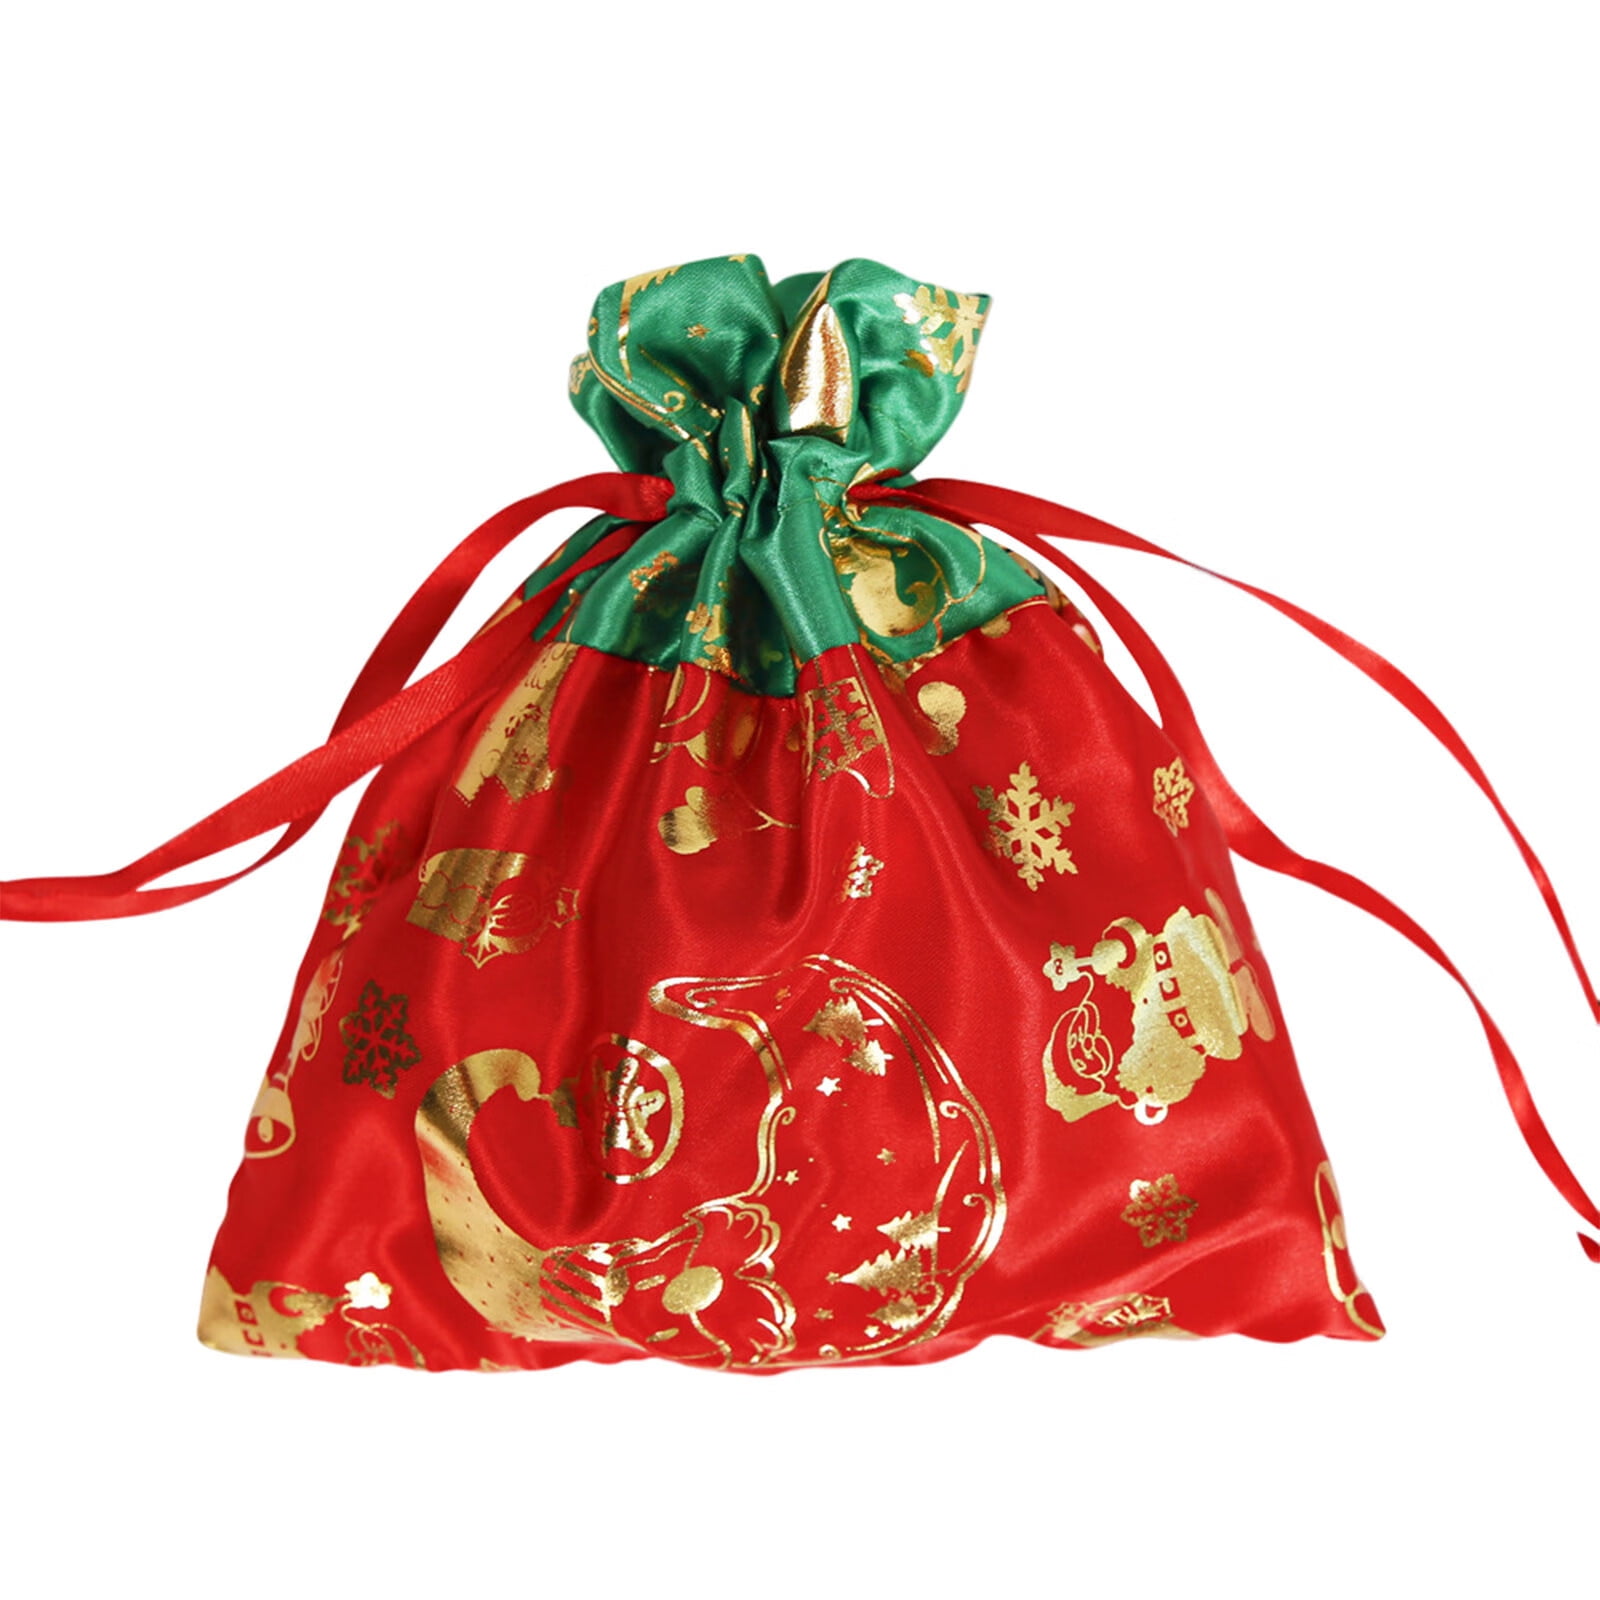 Northlight 19.5 Red Christmas Gift Bag Storage